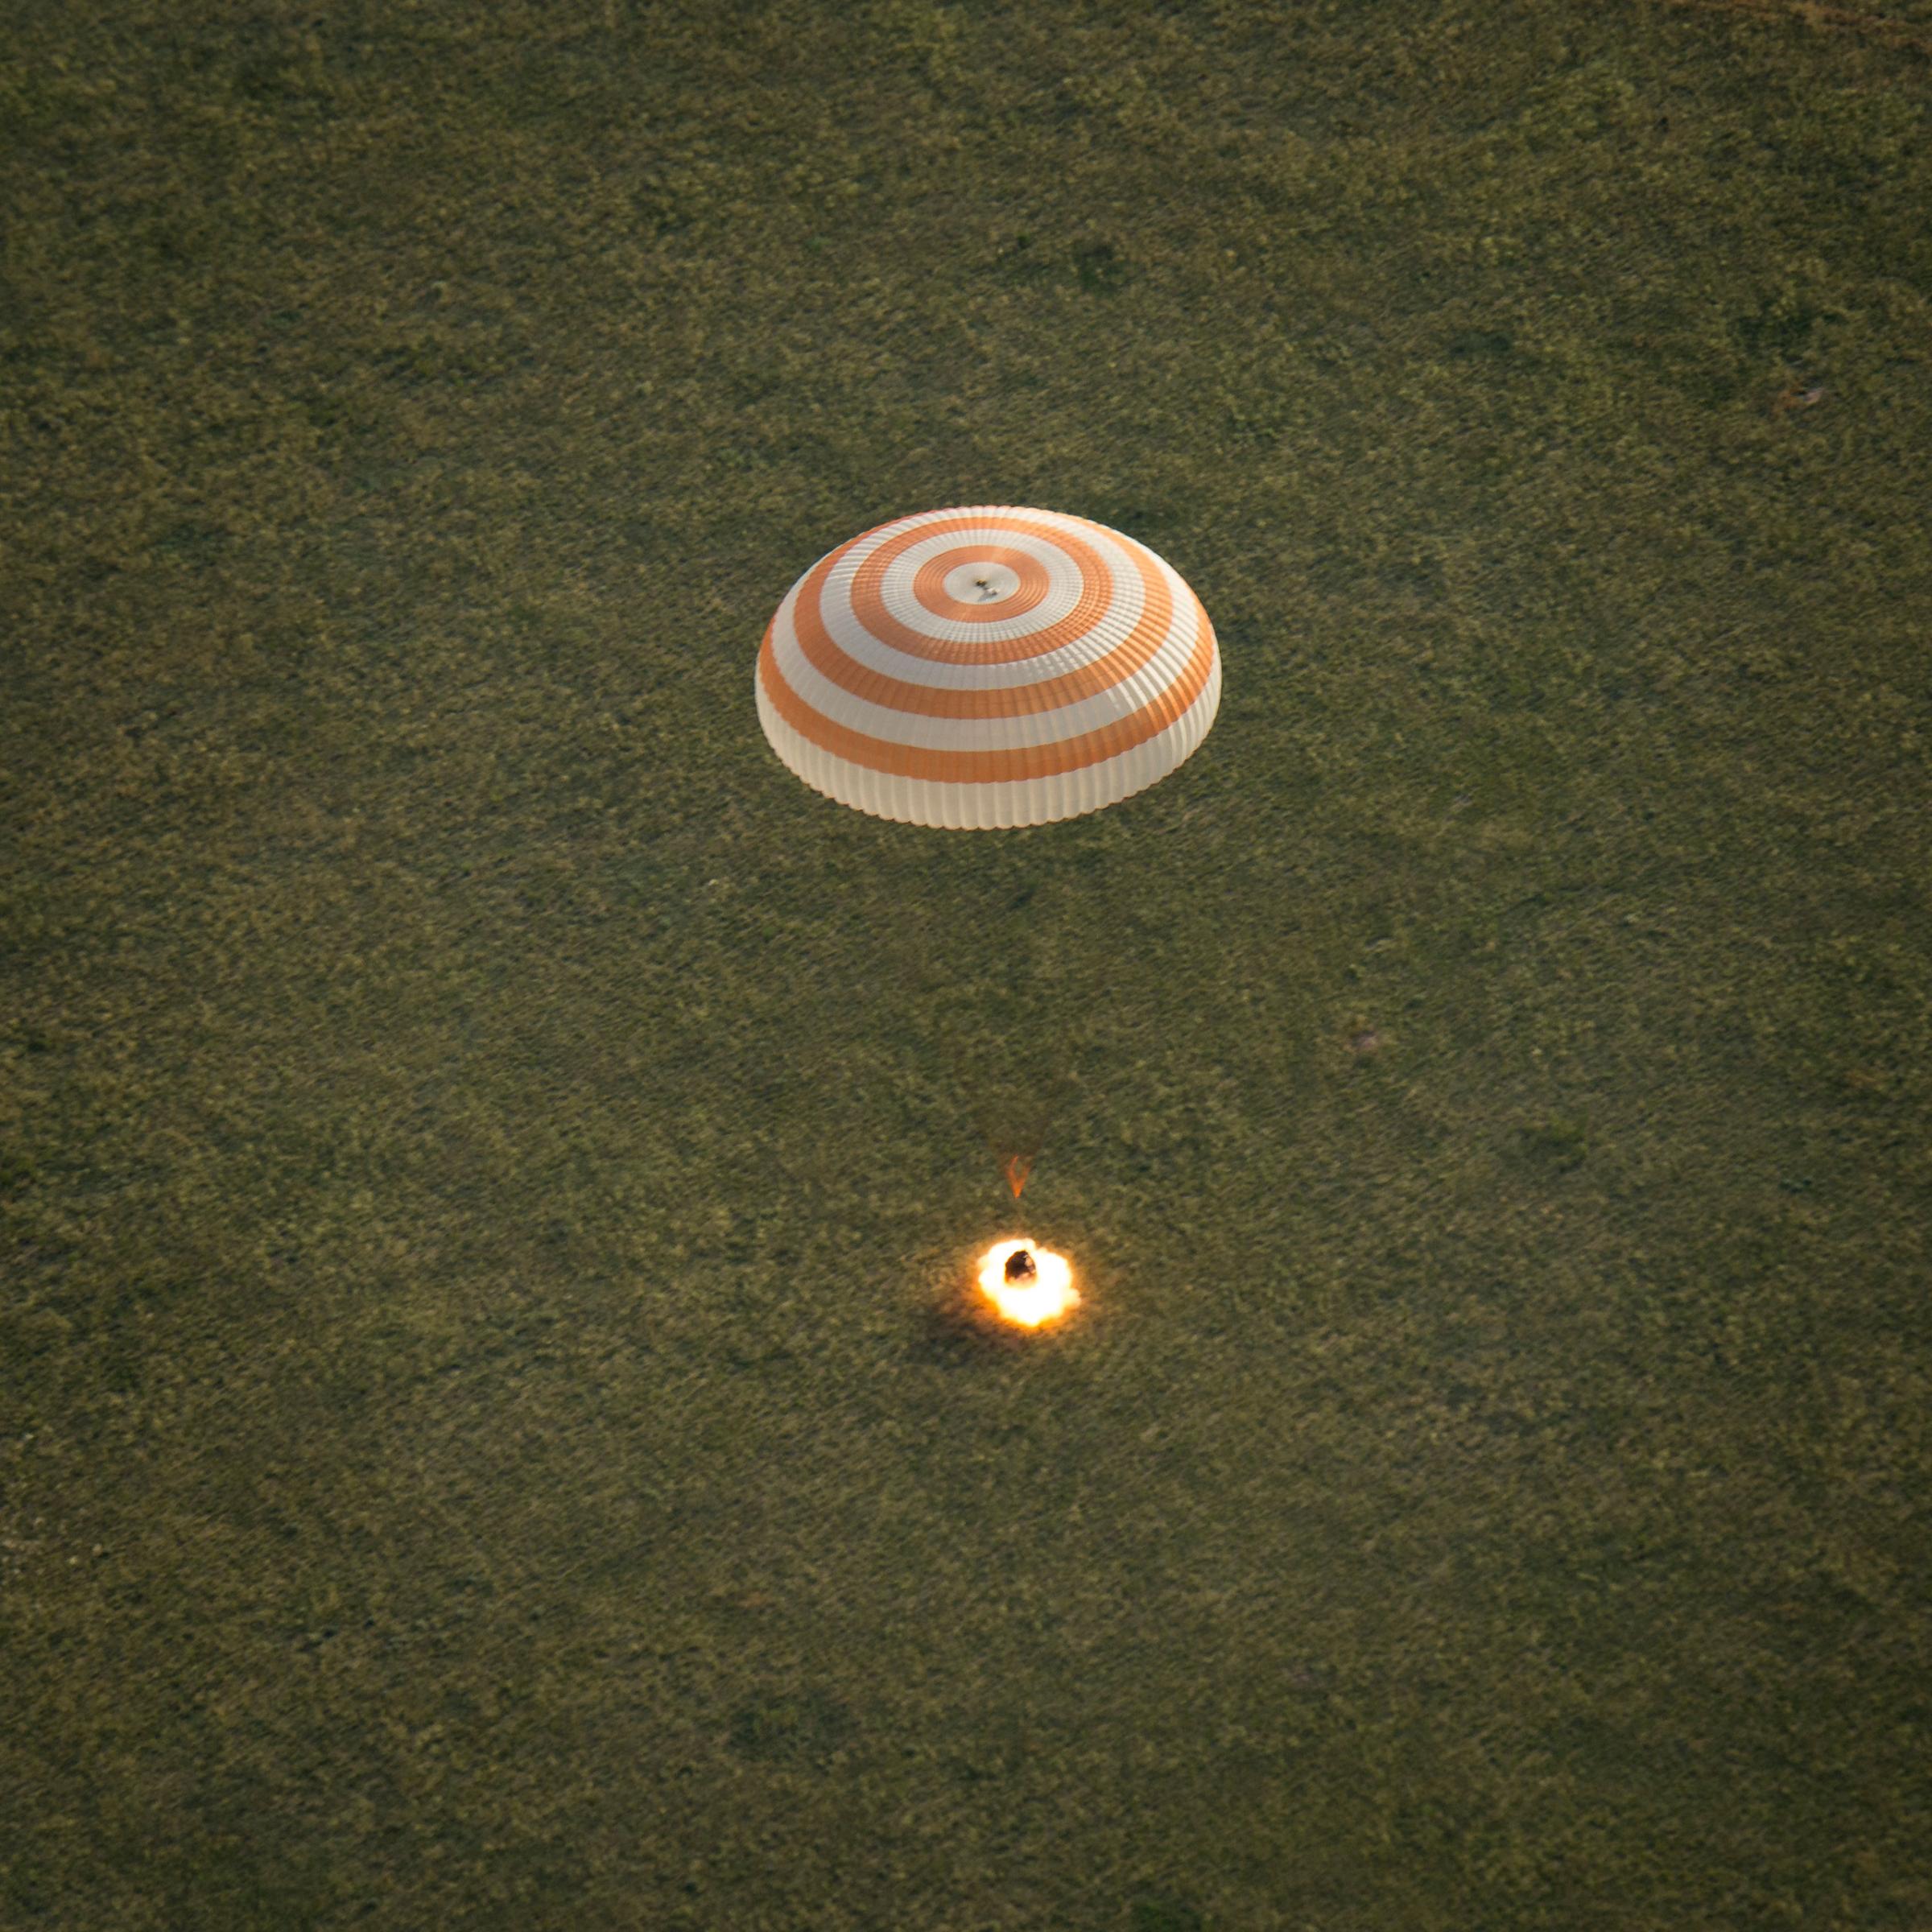 Expedition 43 Soyuz TMA-15M Landing